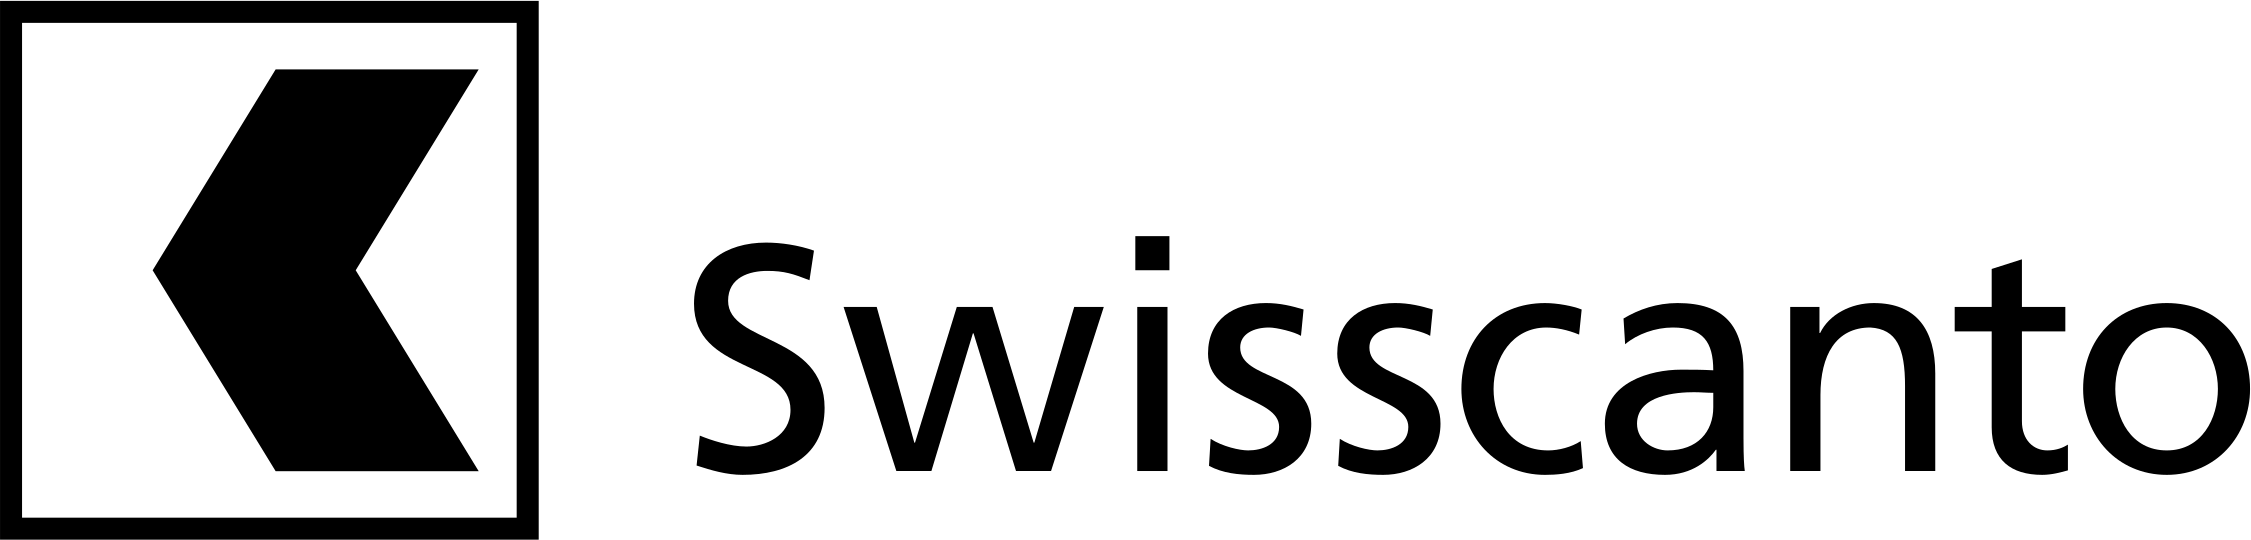 Logo Swisscanto in formato SVG